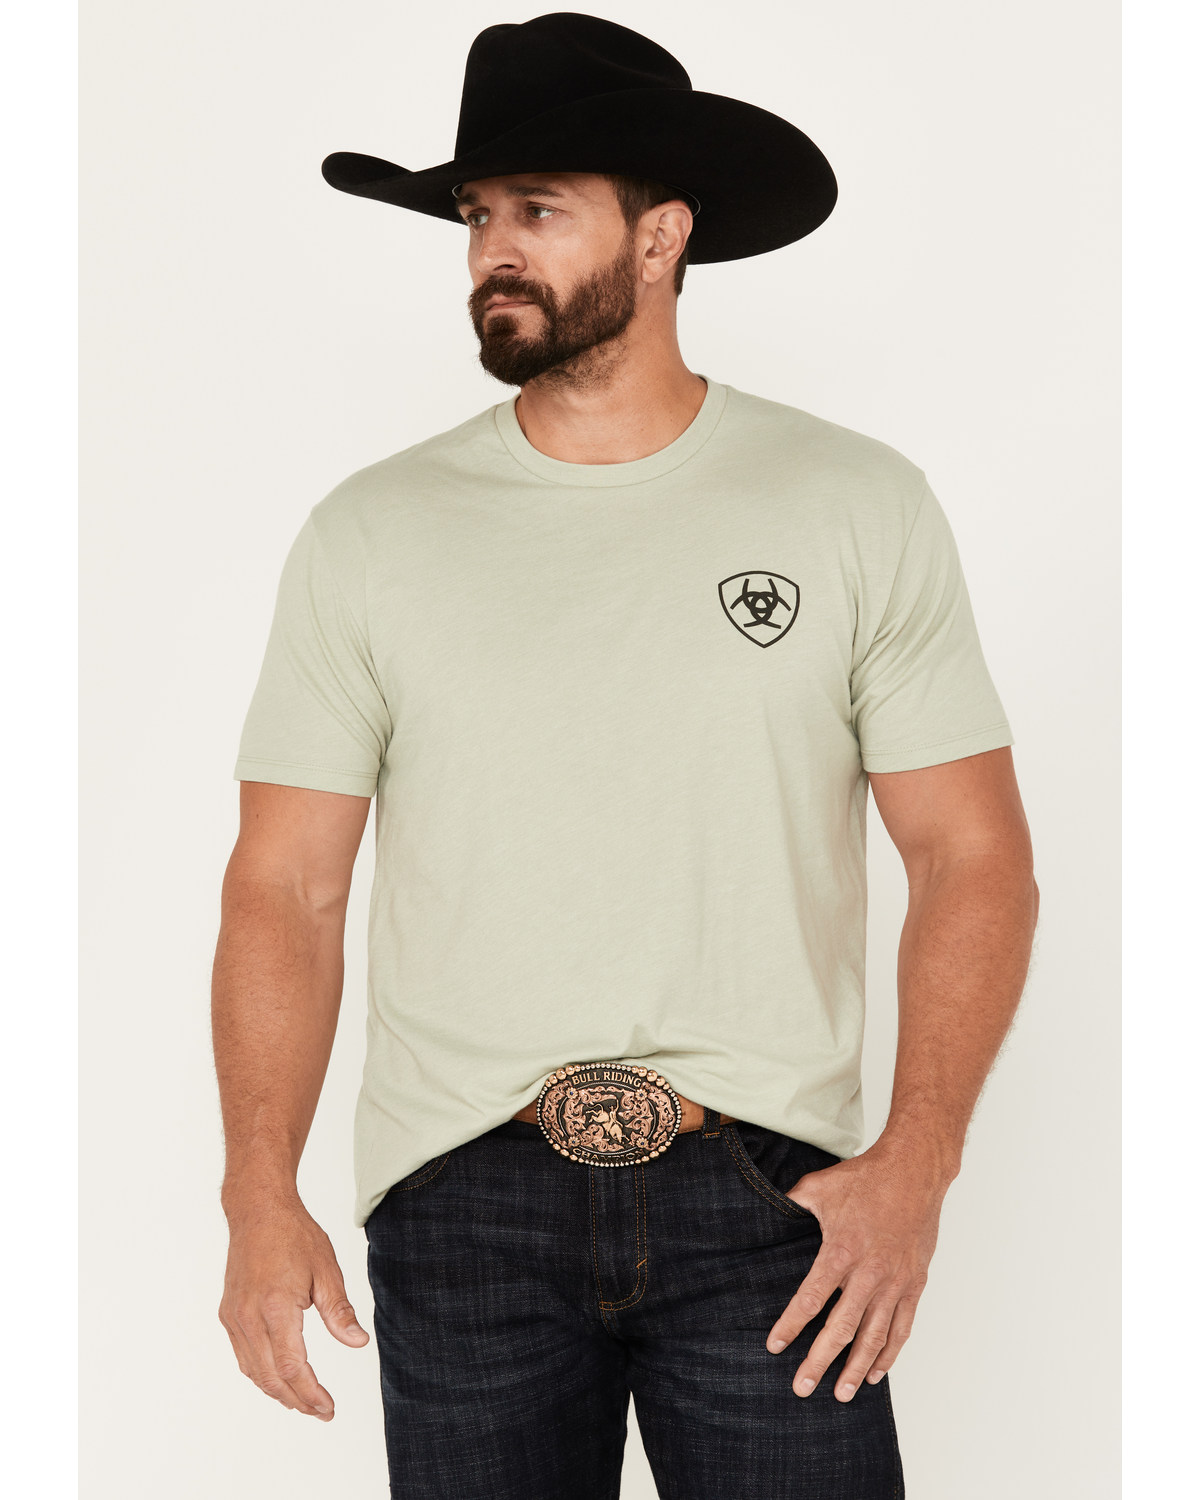 Ariat Men's Retro Striped Logo Short Sleeve Graphic T-Shirt